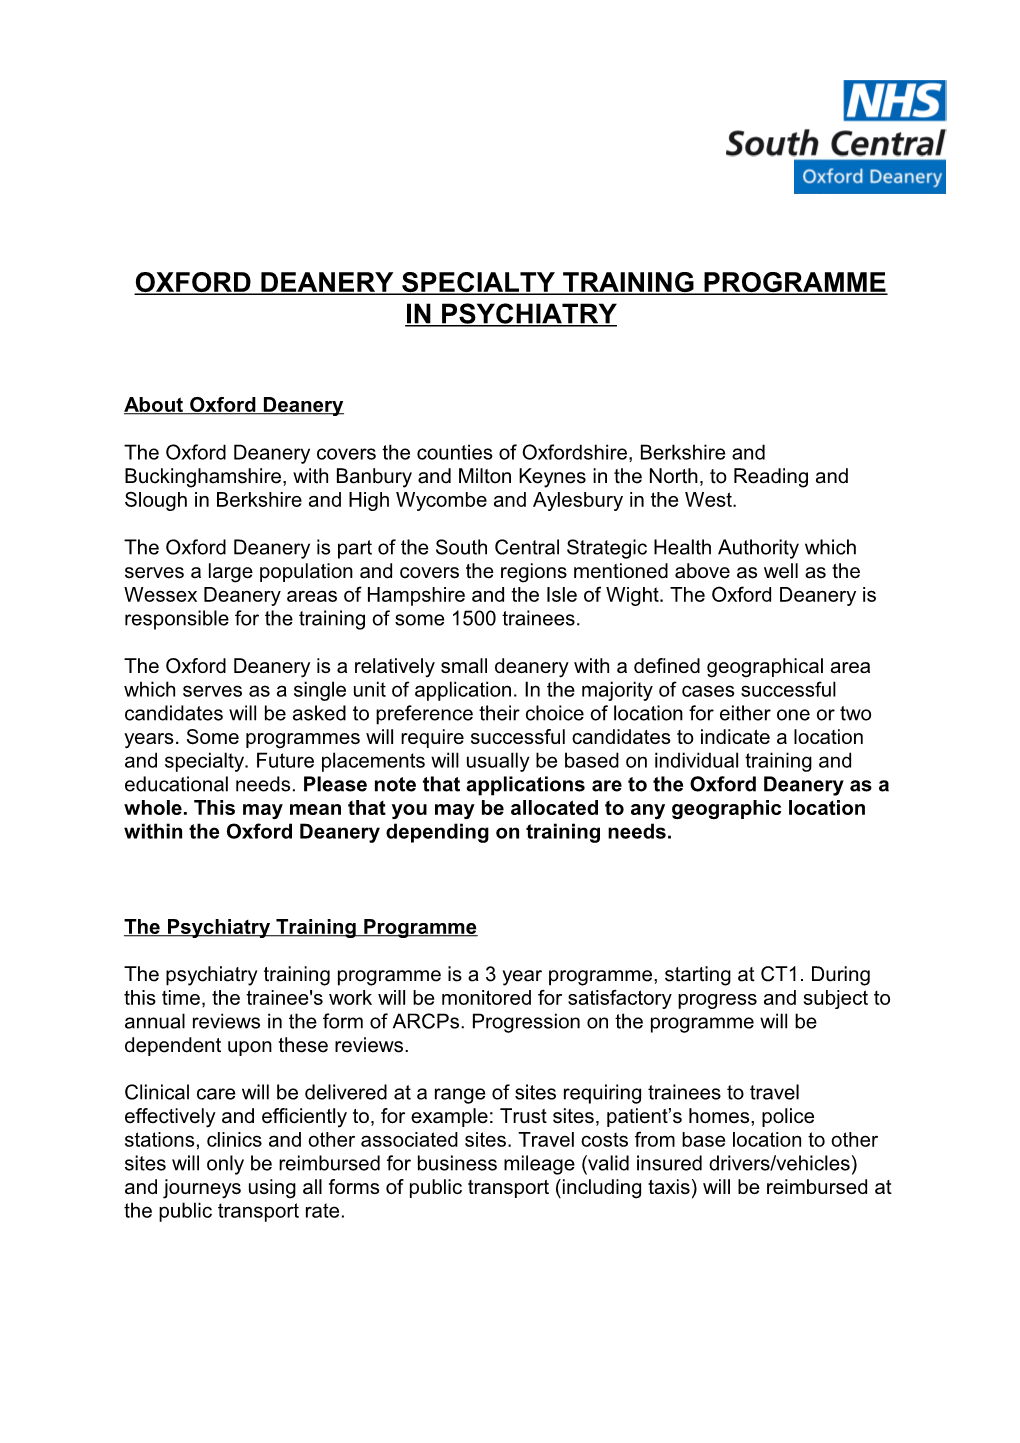 Oxford Deanery Specialty Training Programme in Psychiatry